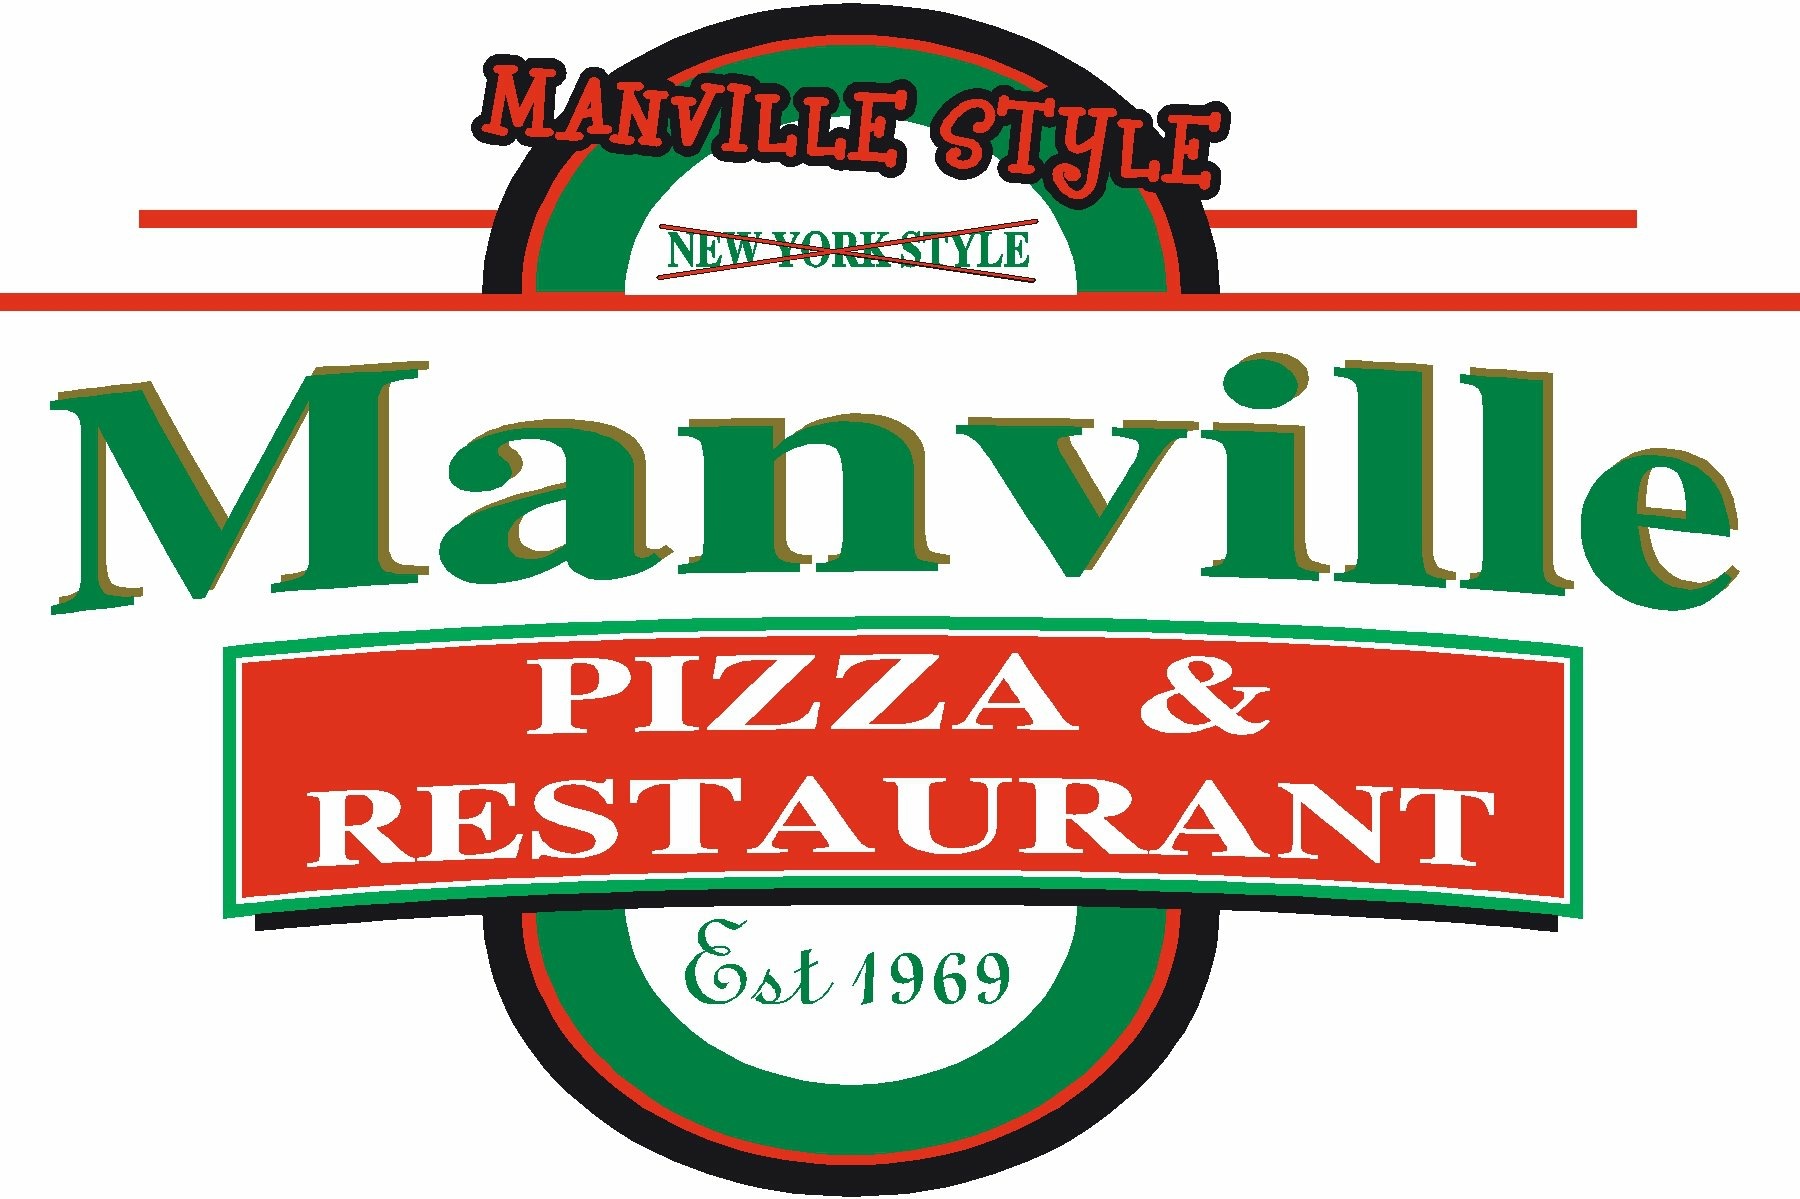 ManvillePizza.jpeg